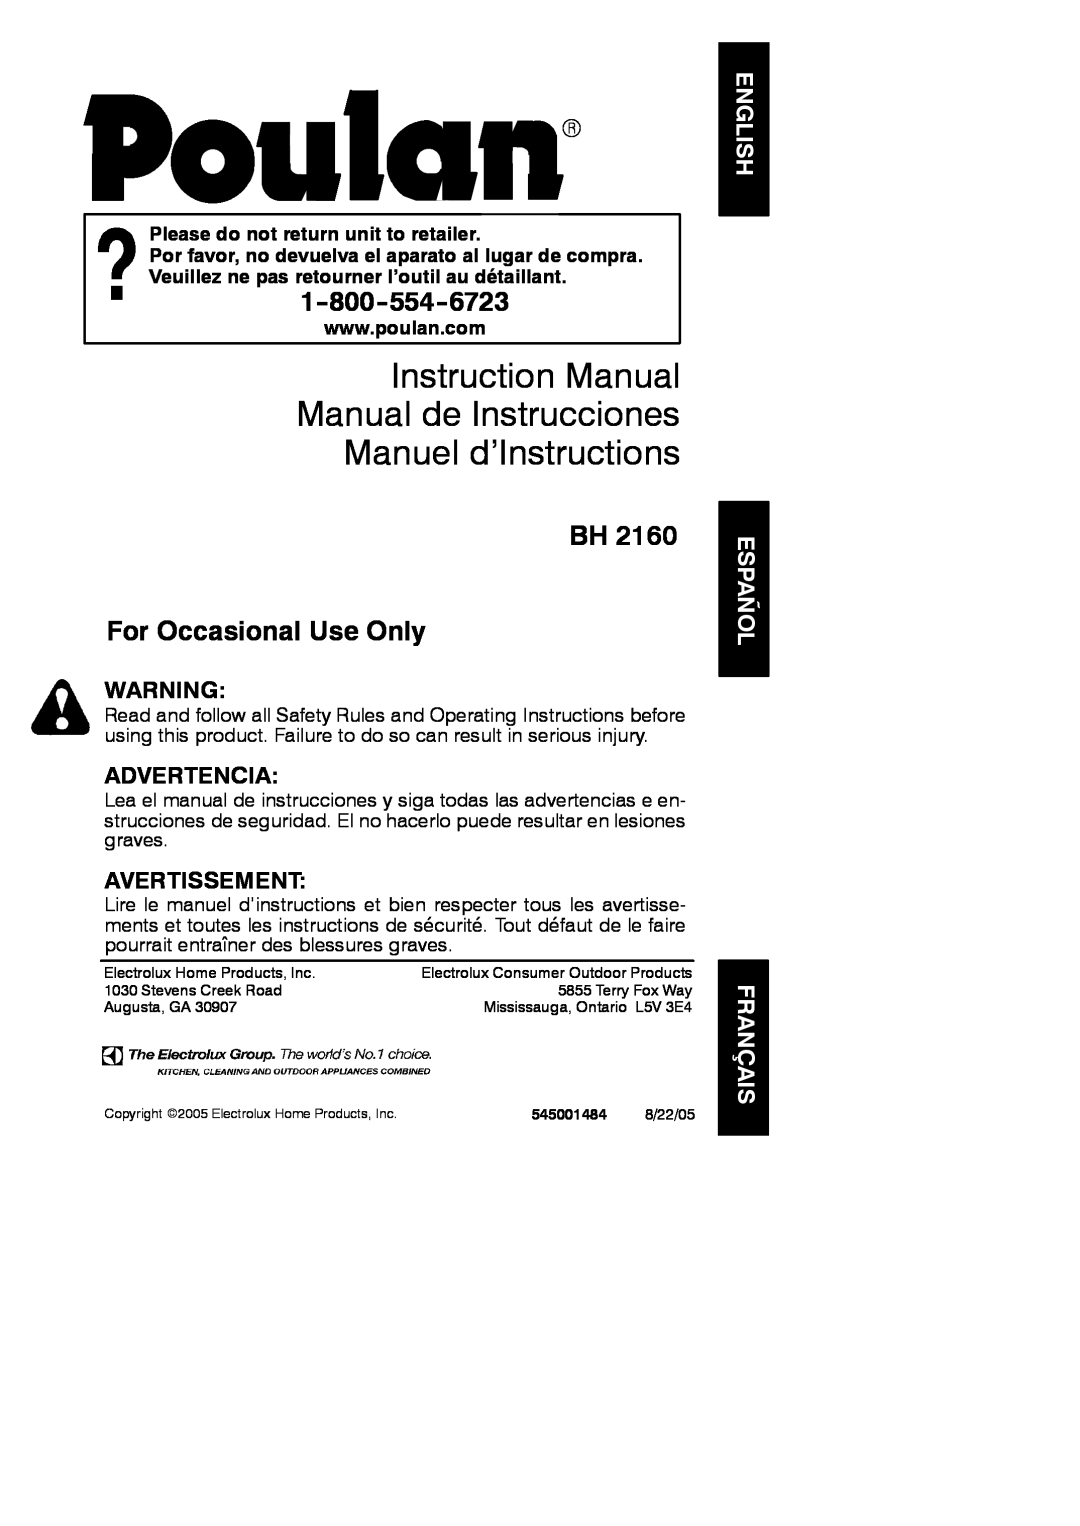 Poulan BH 2160 instruction manual English Español Français, Manuel d’Instructions, BH For Occasional Use Only, Advertencia 